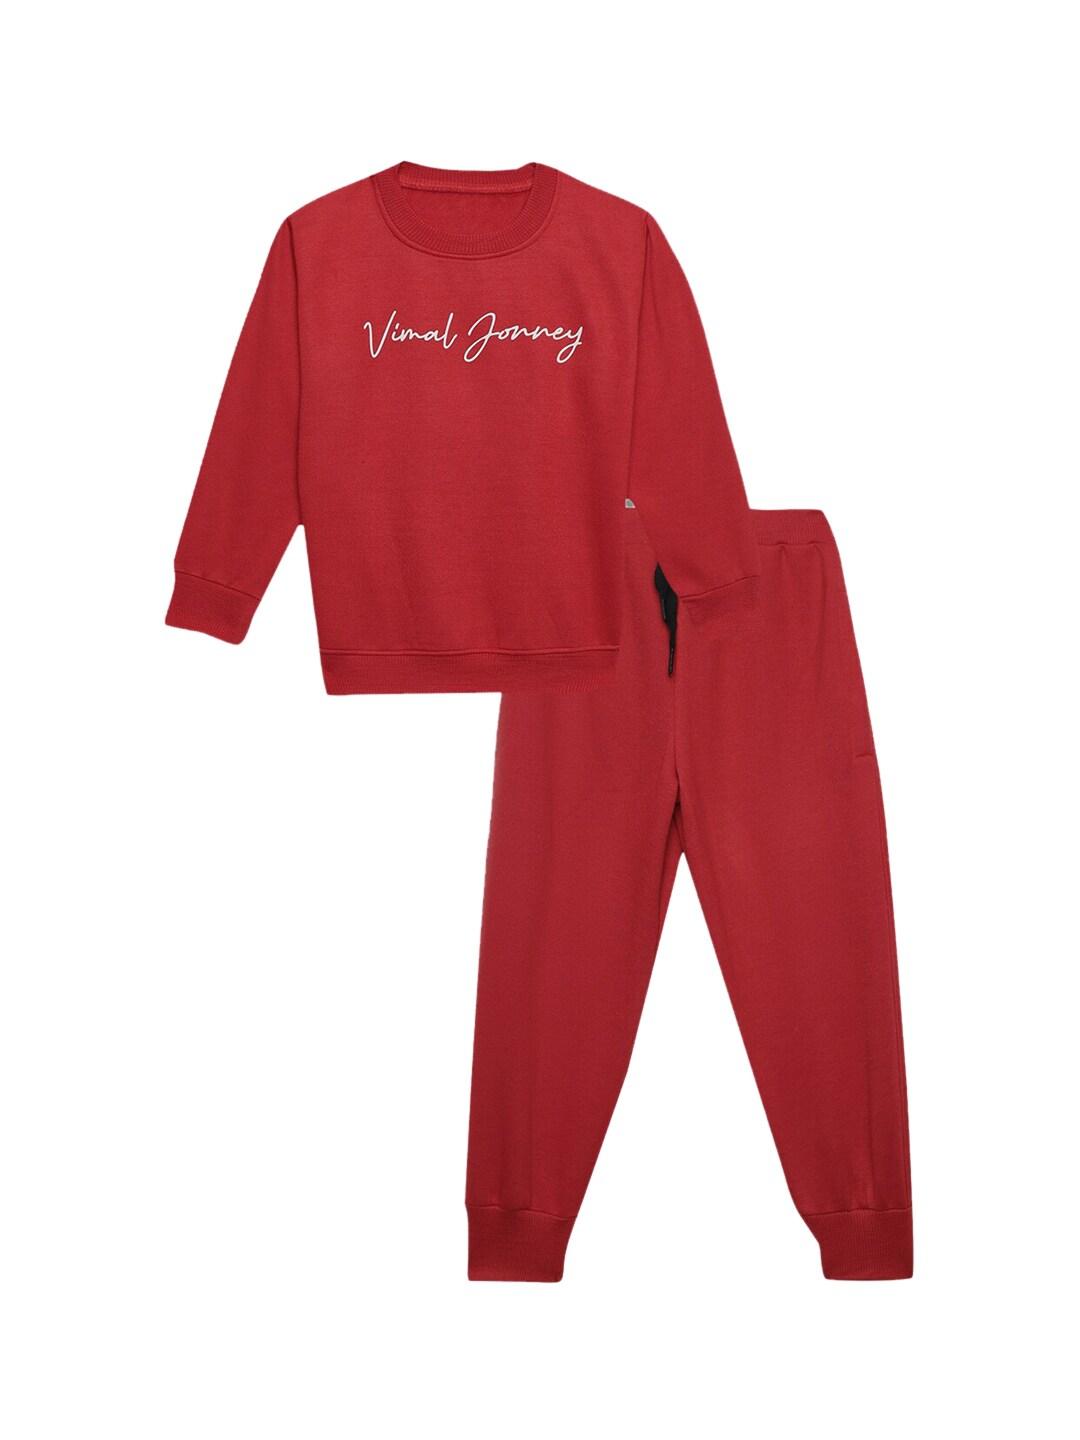 vimal jonney printed sweatshirt & joggers clothing set